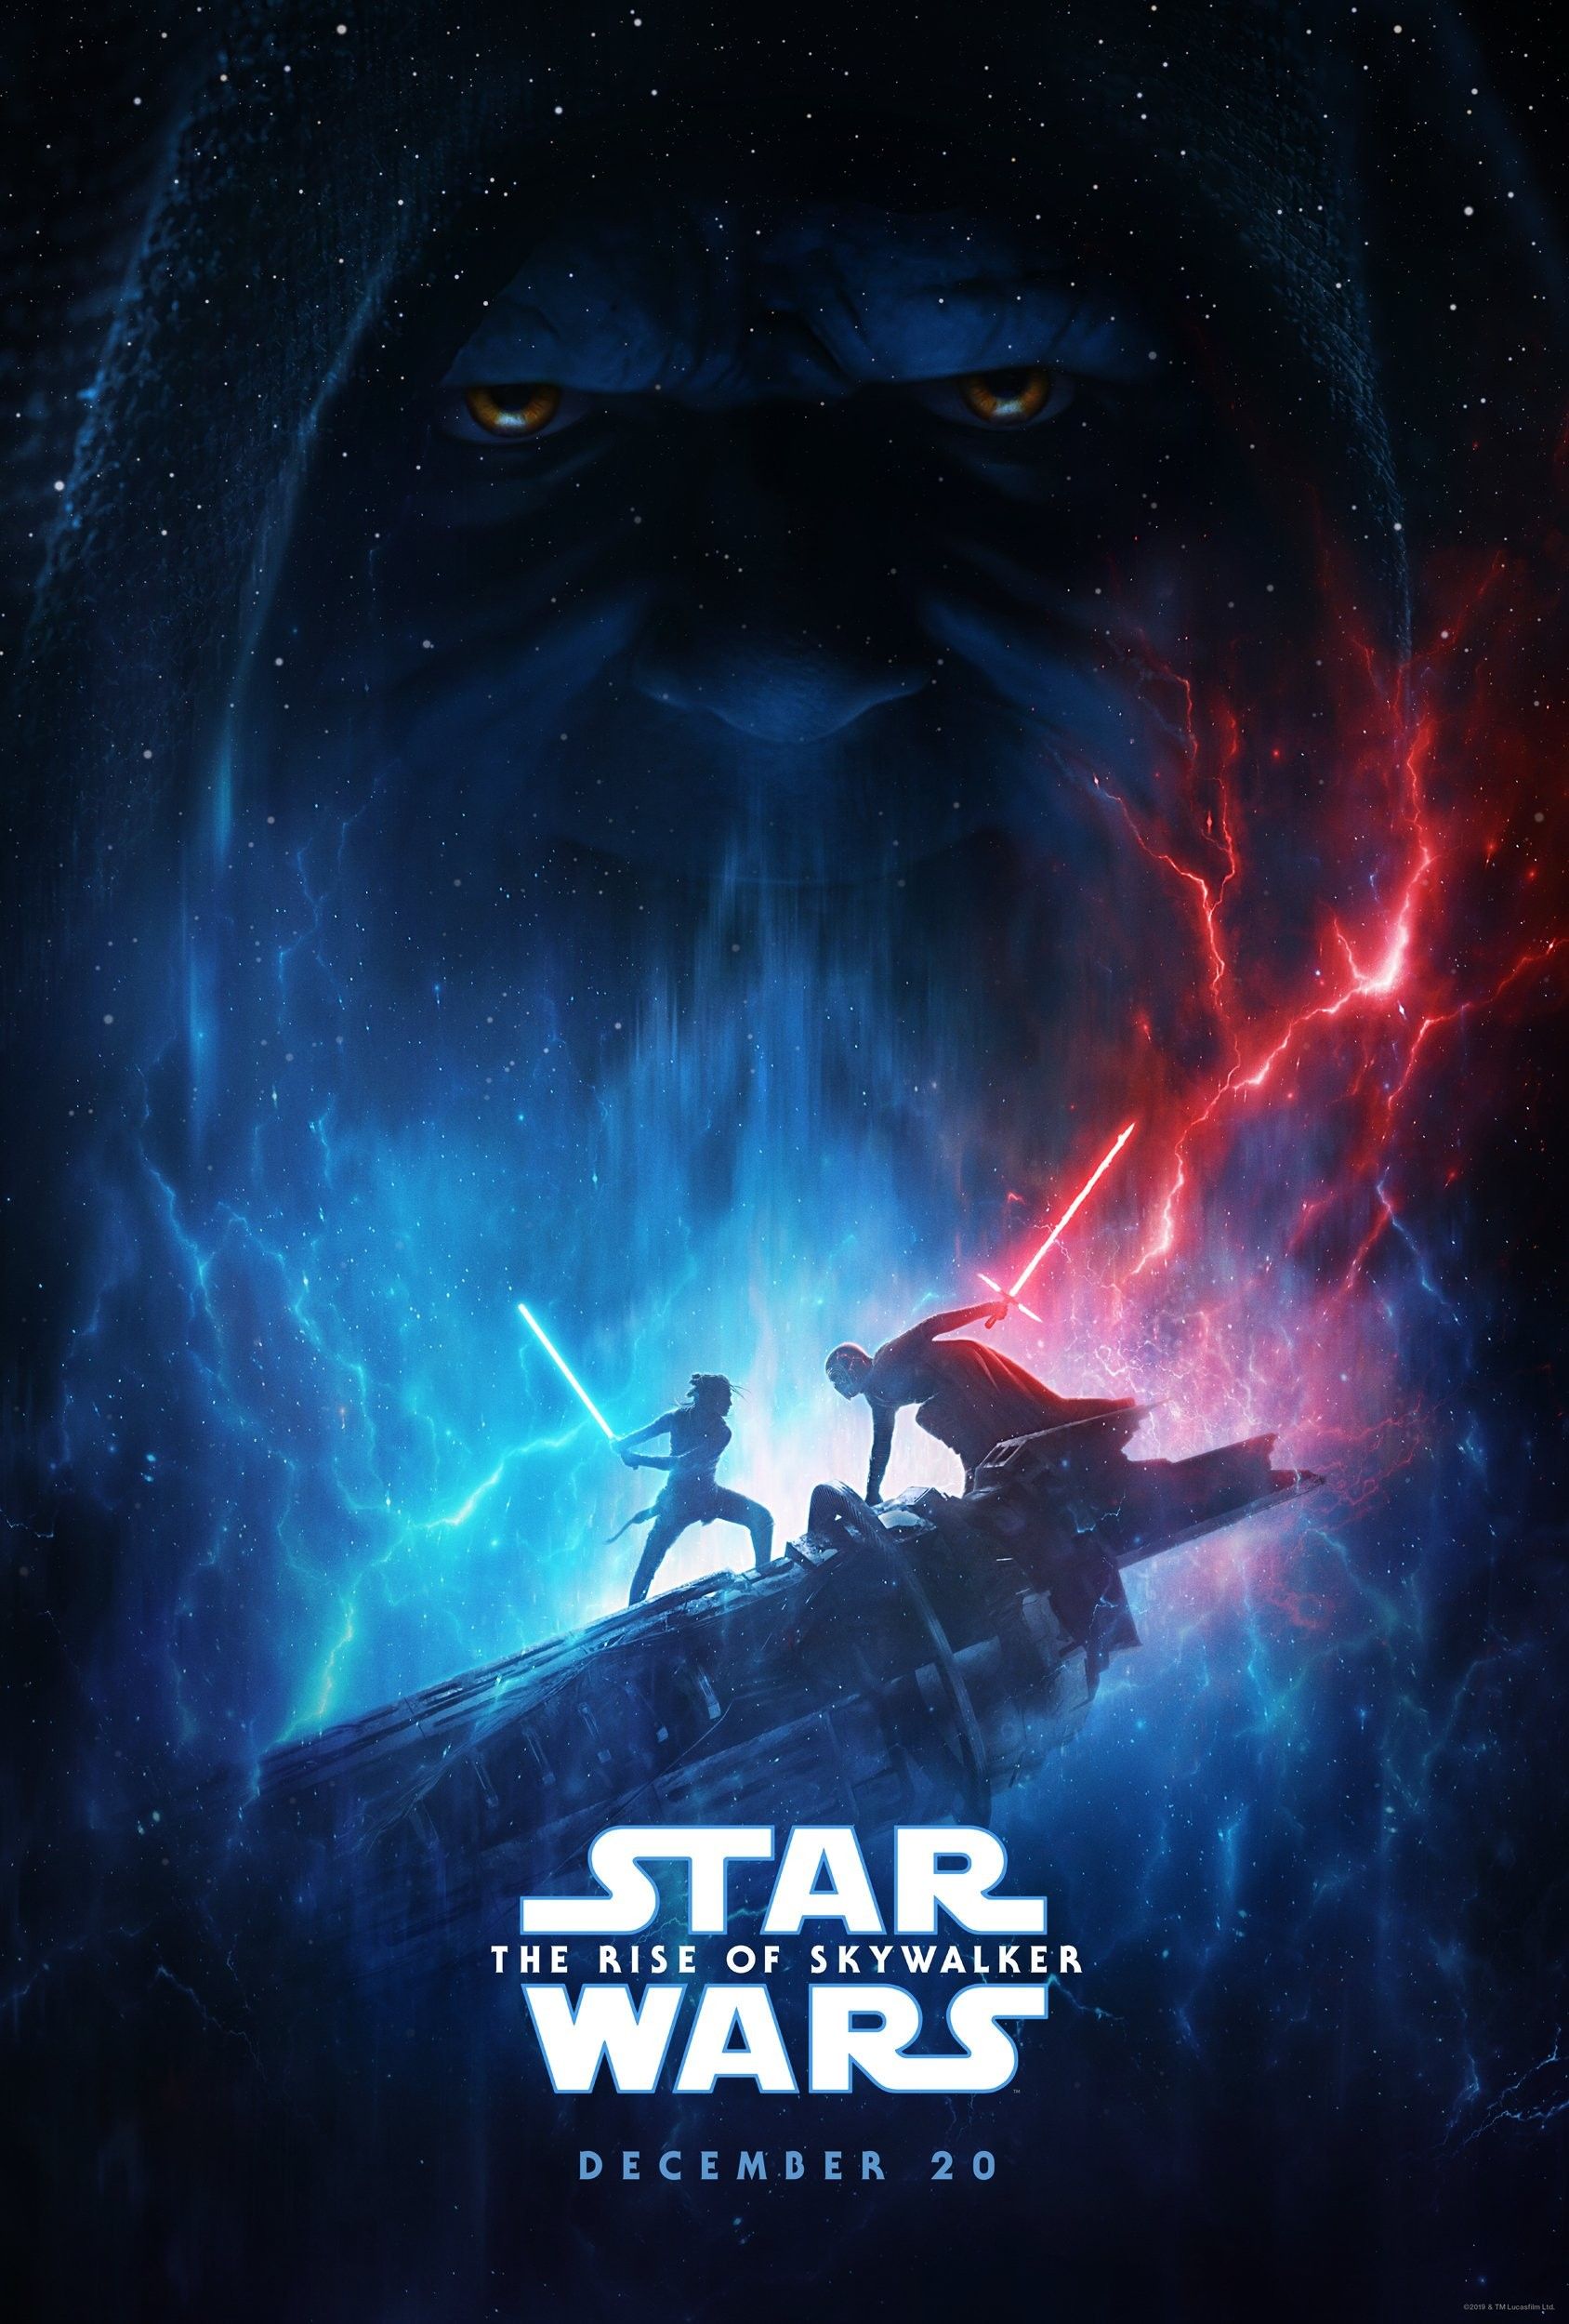 Star Wars The Rise of Skywalker poster